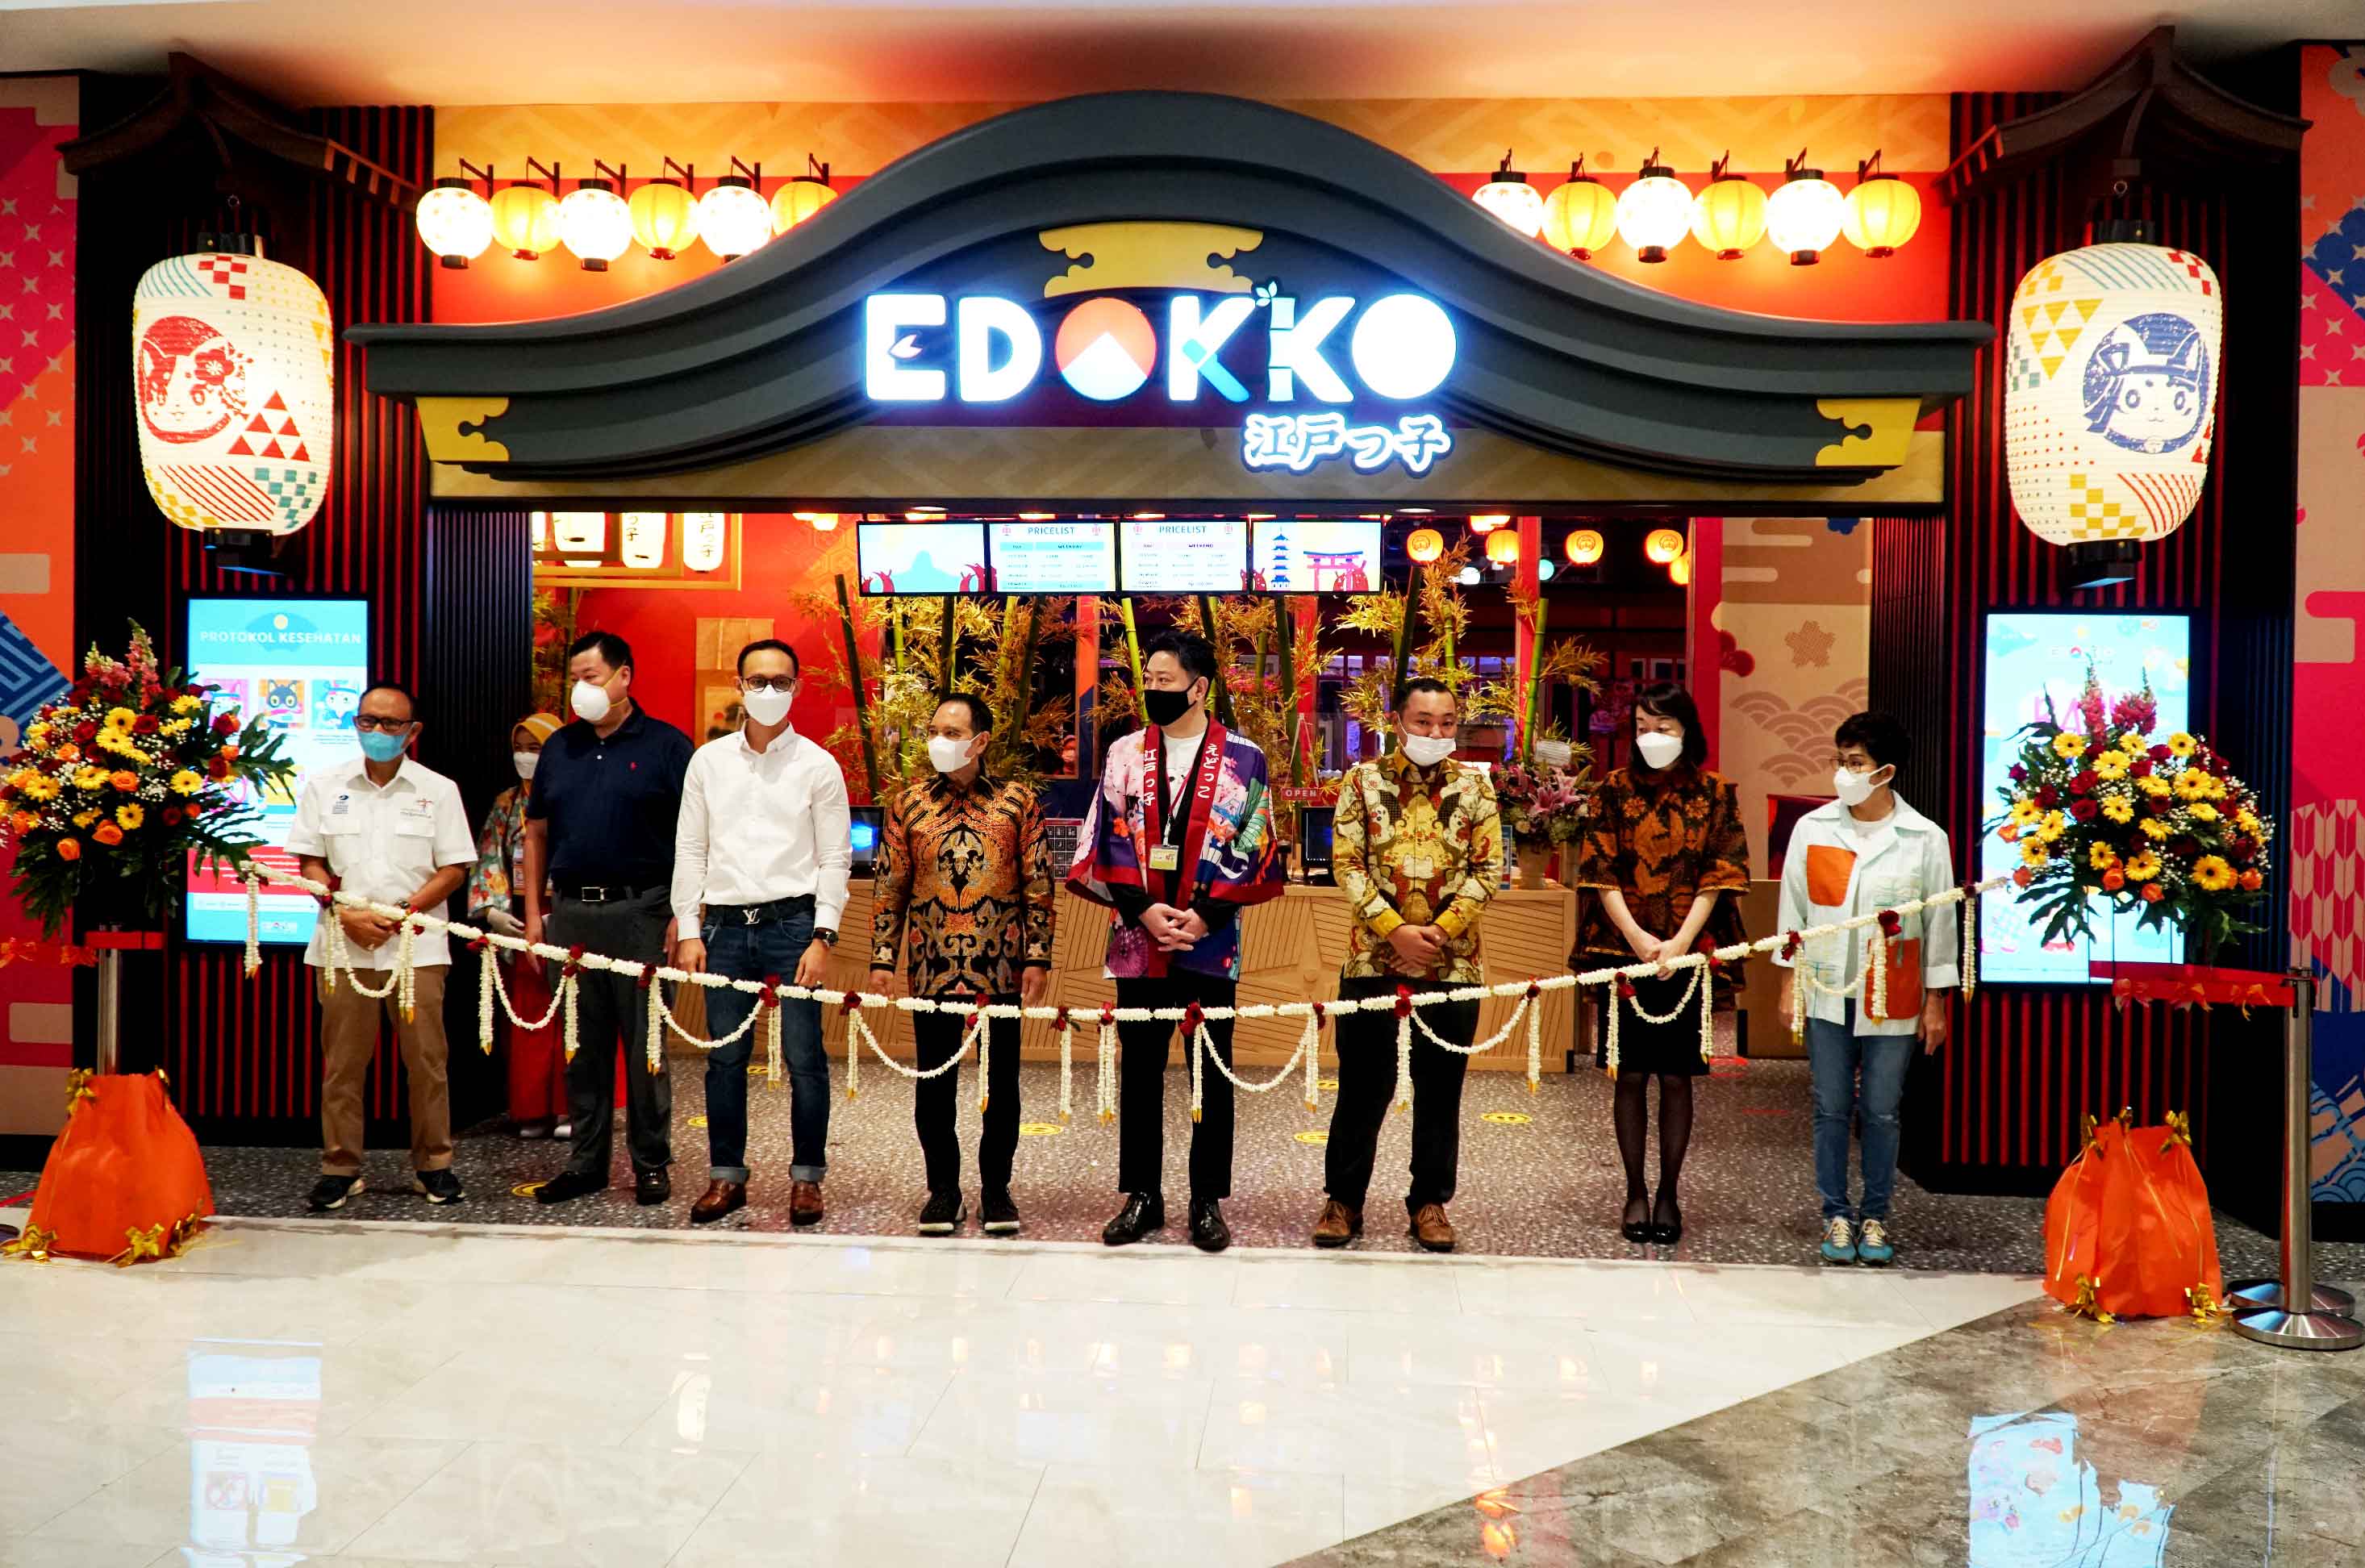 Edokko shop front in lippo mall puri st. moritz